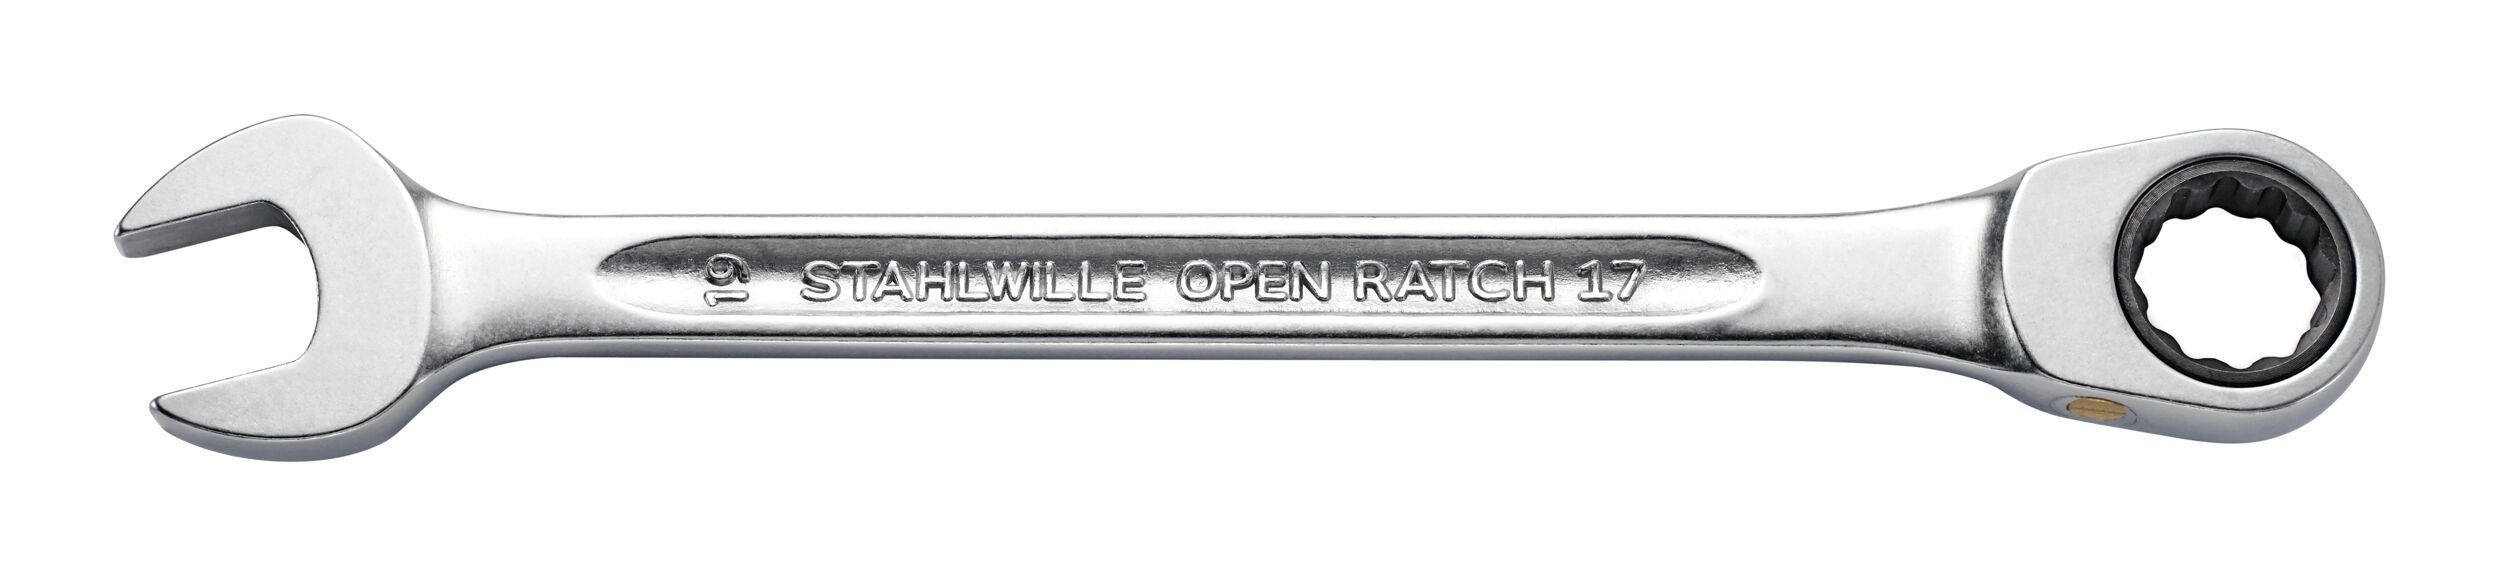 Stahlwille Ratschenringschlüssel, Maul-Ringratschen-Schlüssel gerade 14 mm